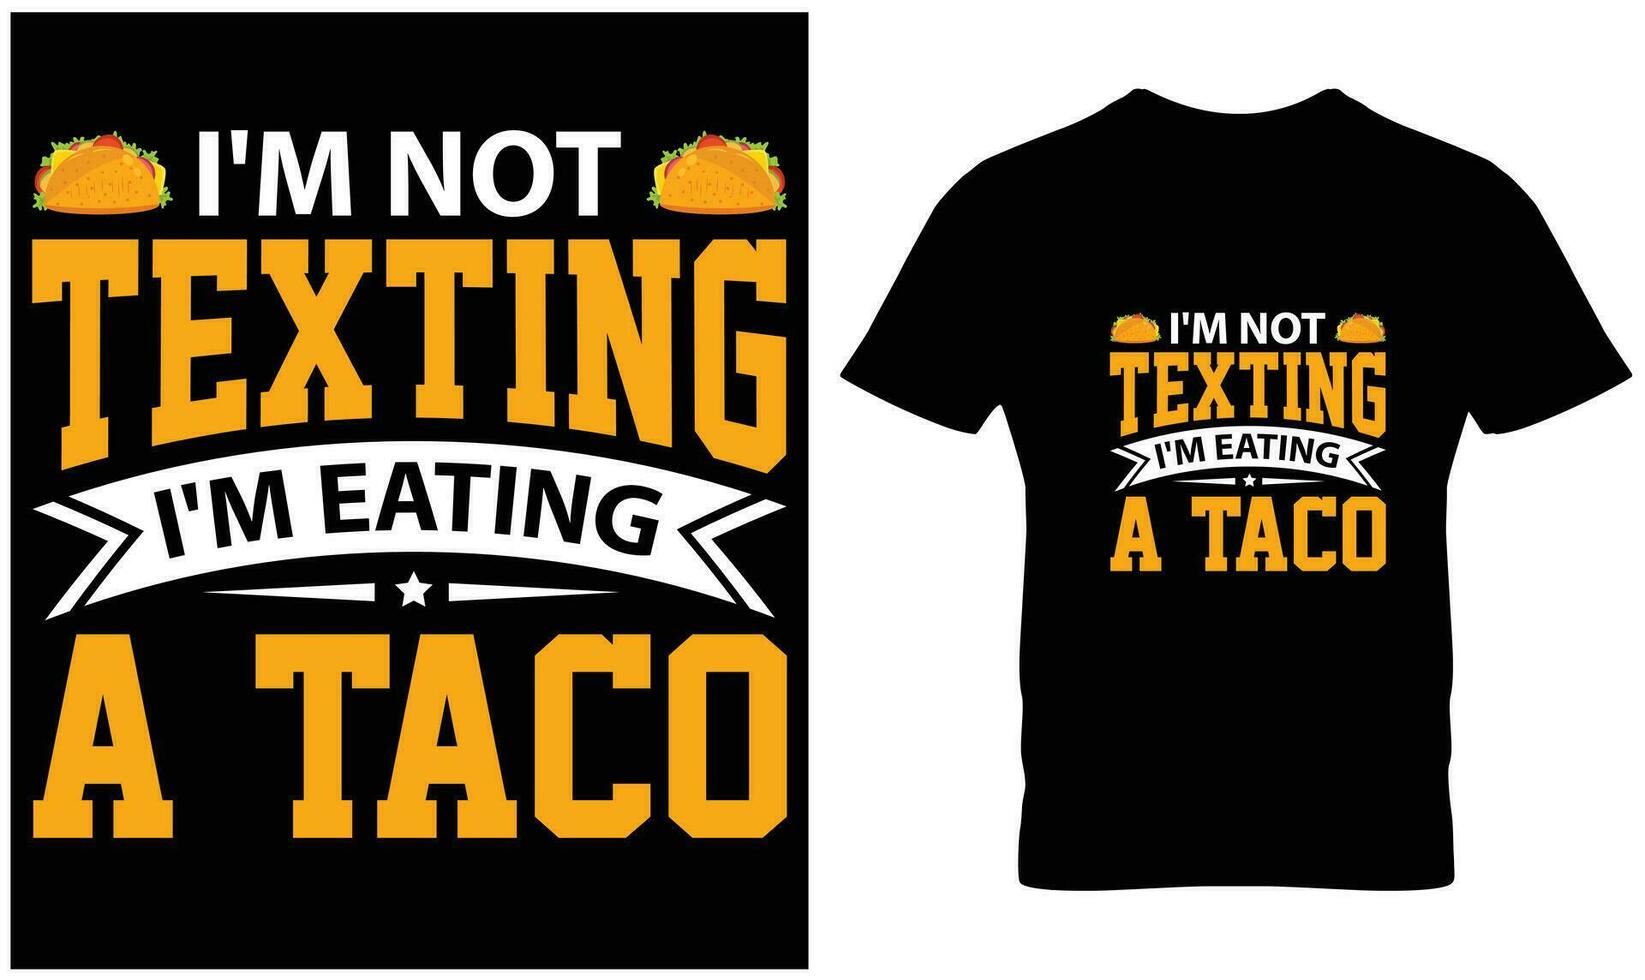 Tacos t-shirt design vector graphic.